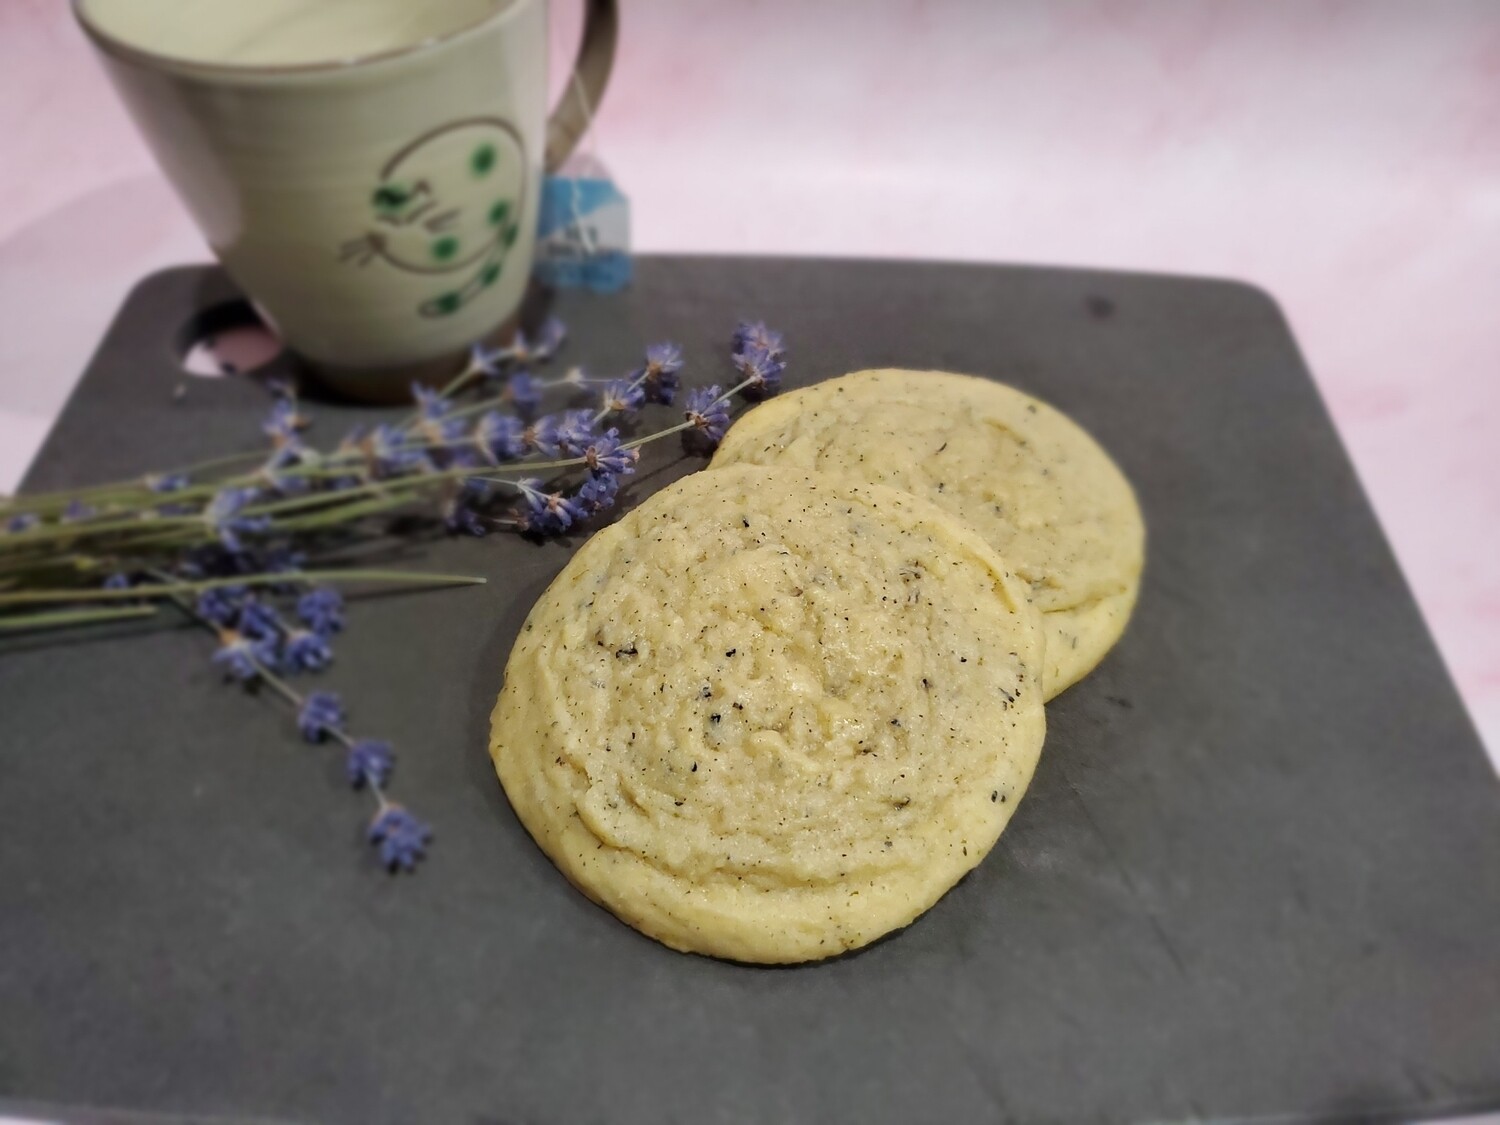 Lavender Earl Gray Cookies - 12 Count